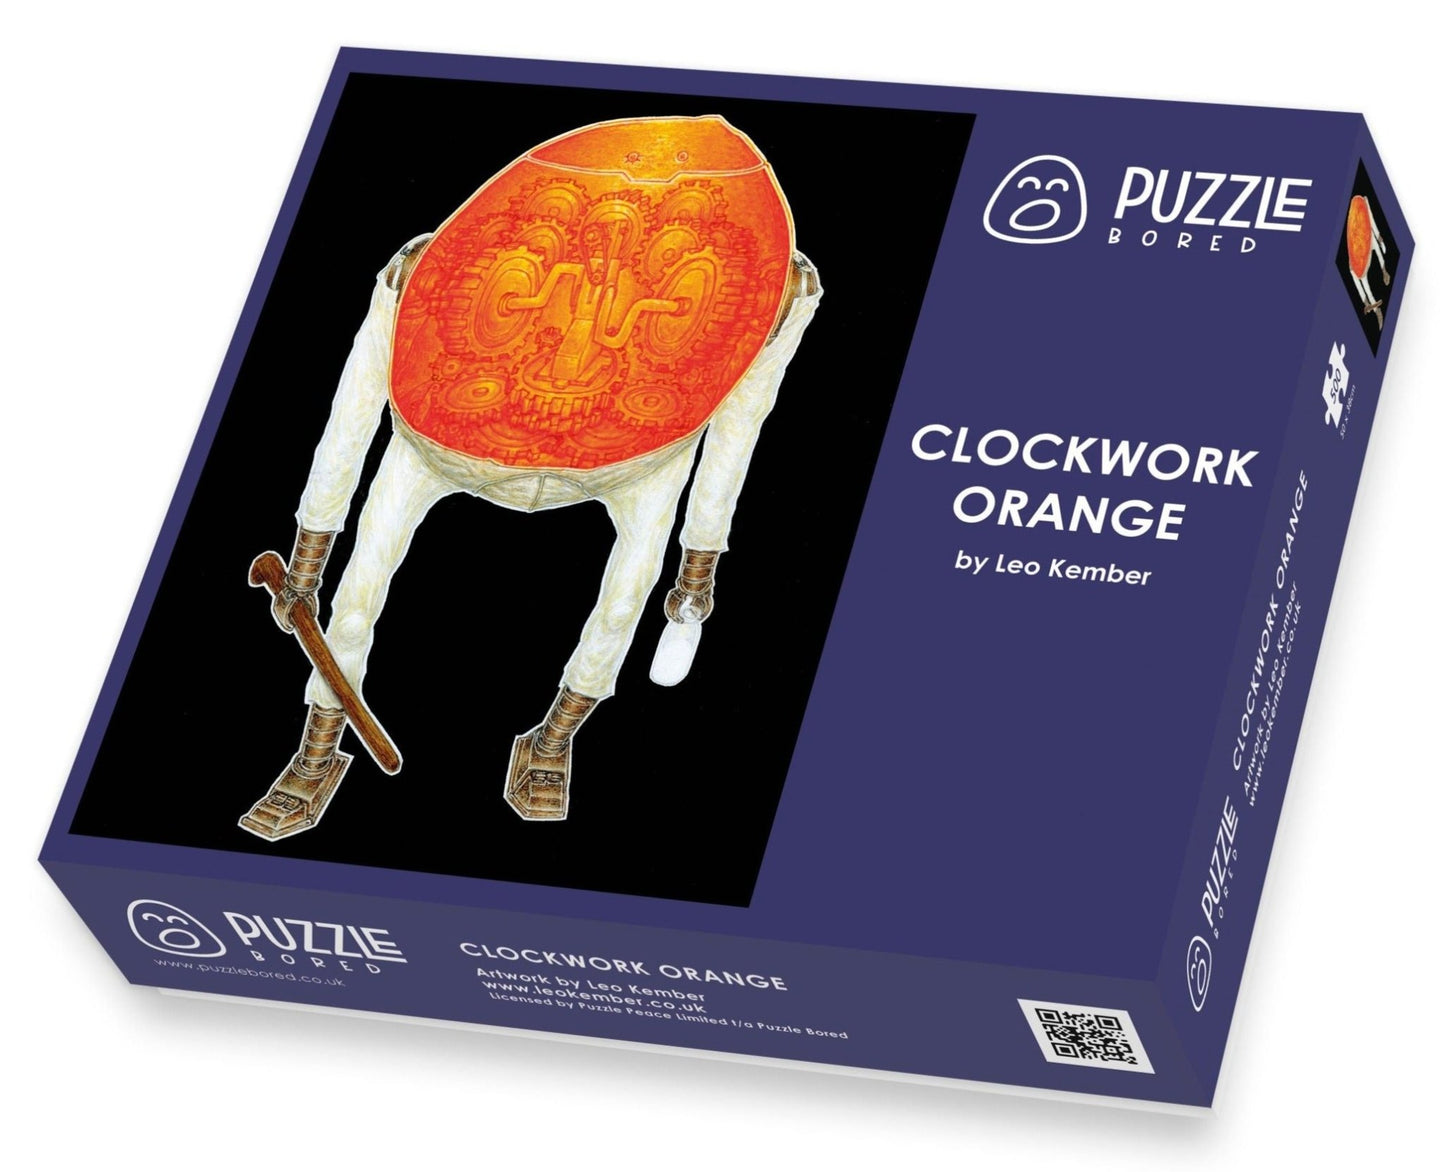 Clockwork Orange by Leo Kember - Puzzle Bored